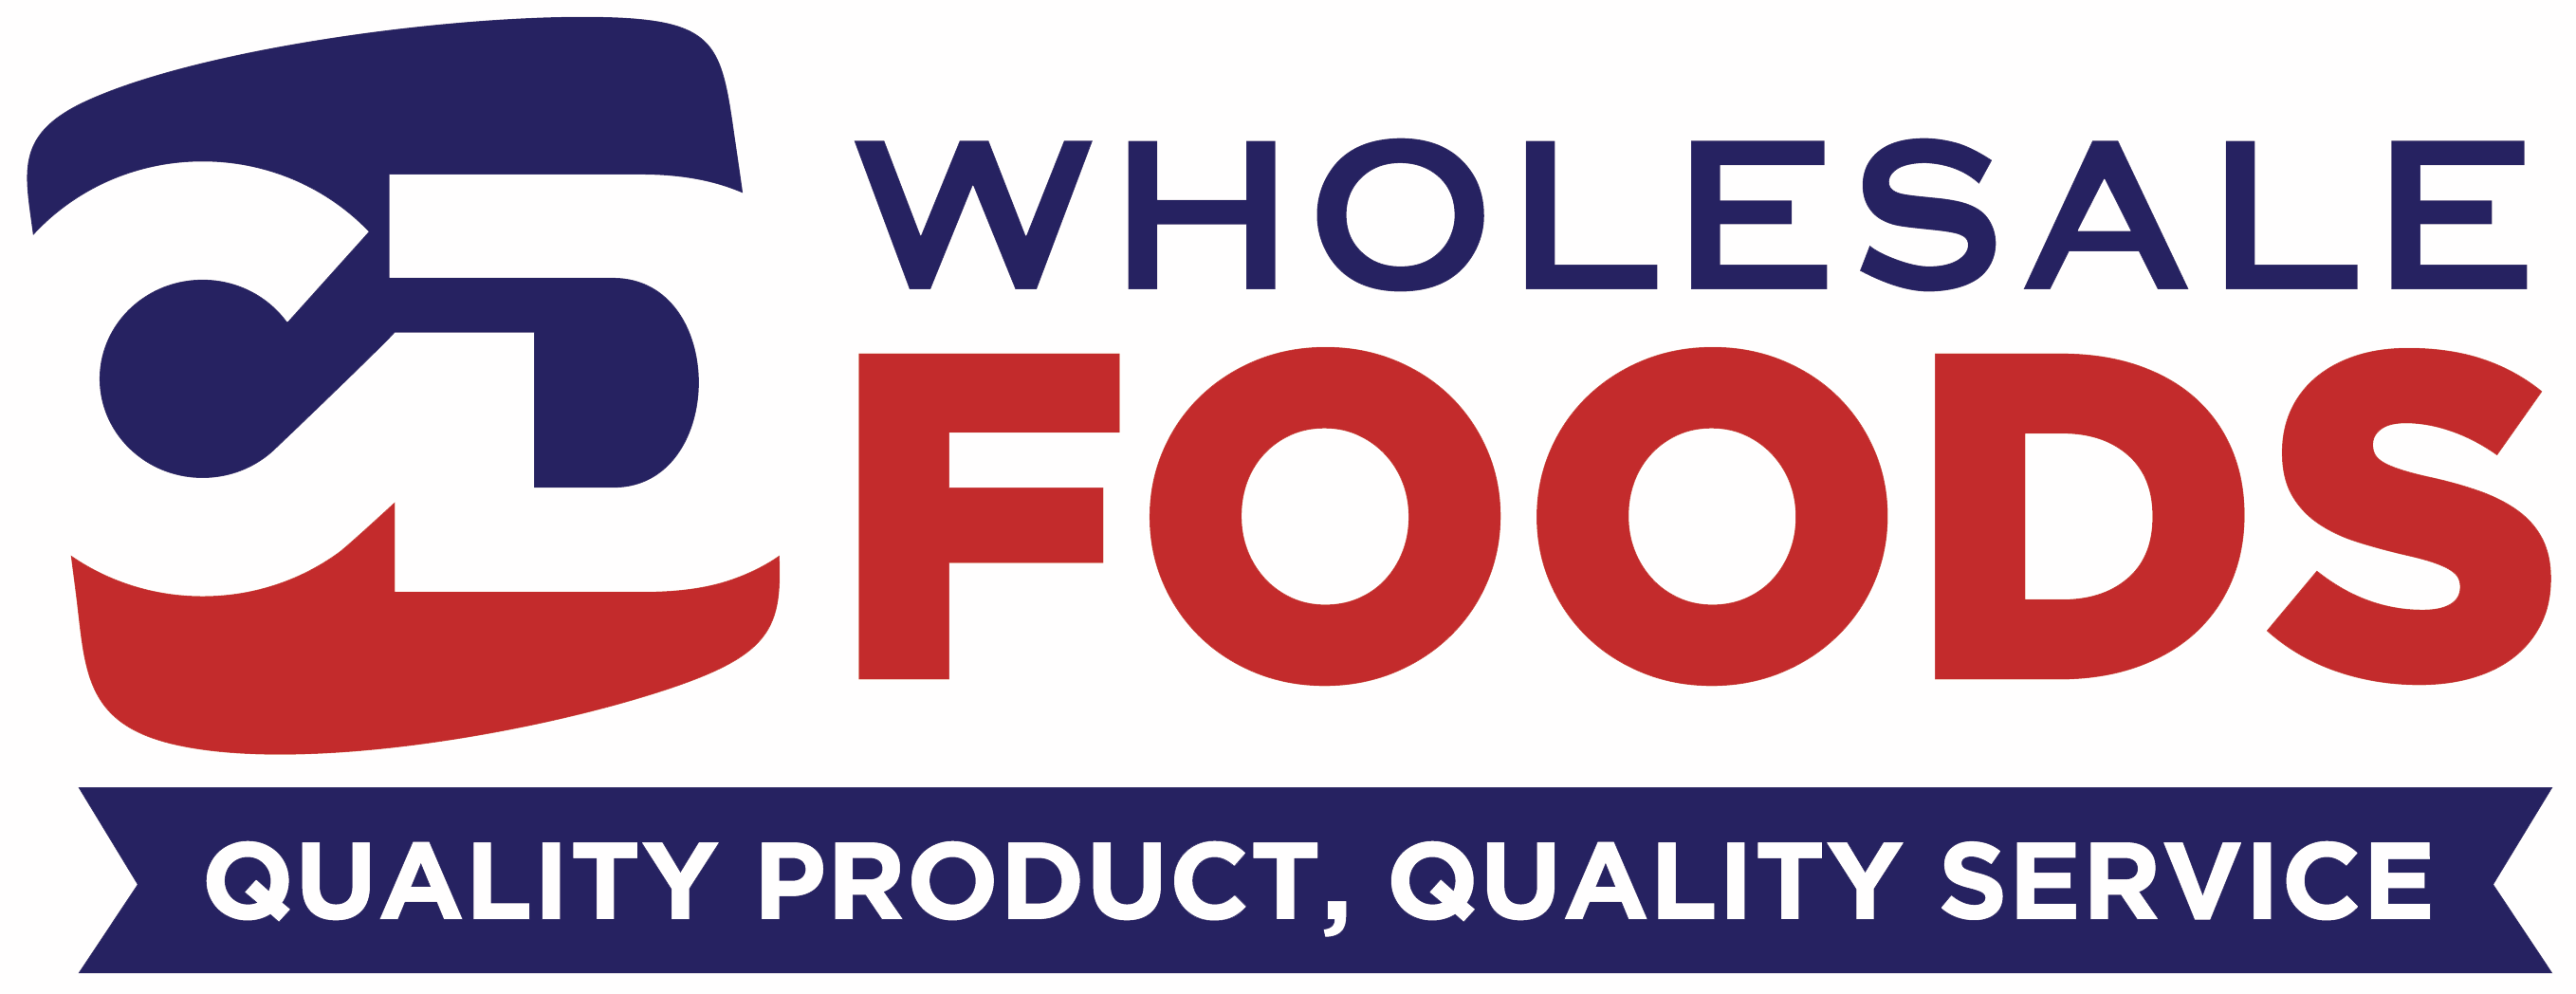 CD Wholesale Foods